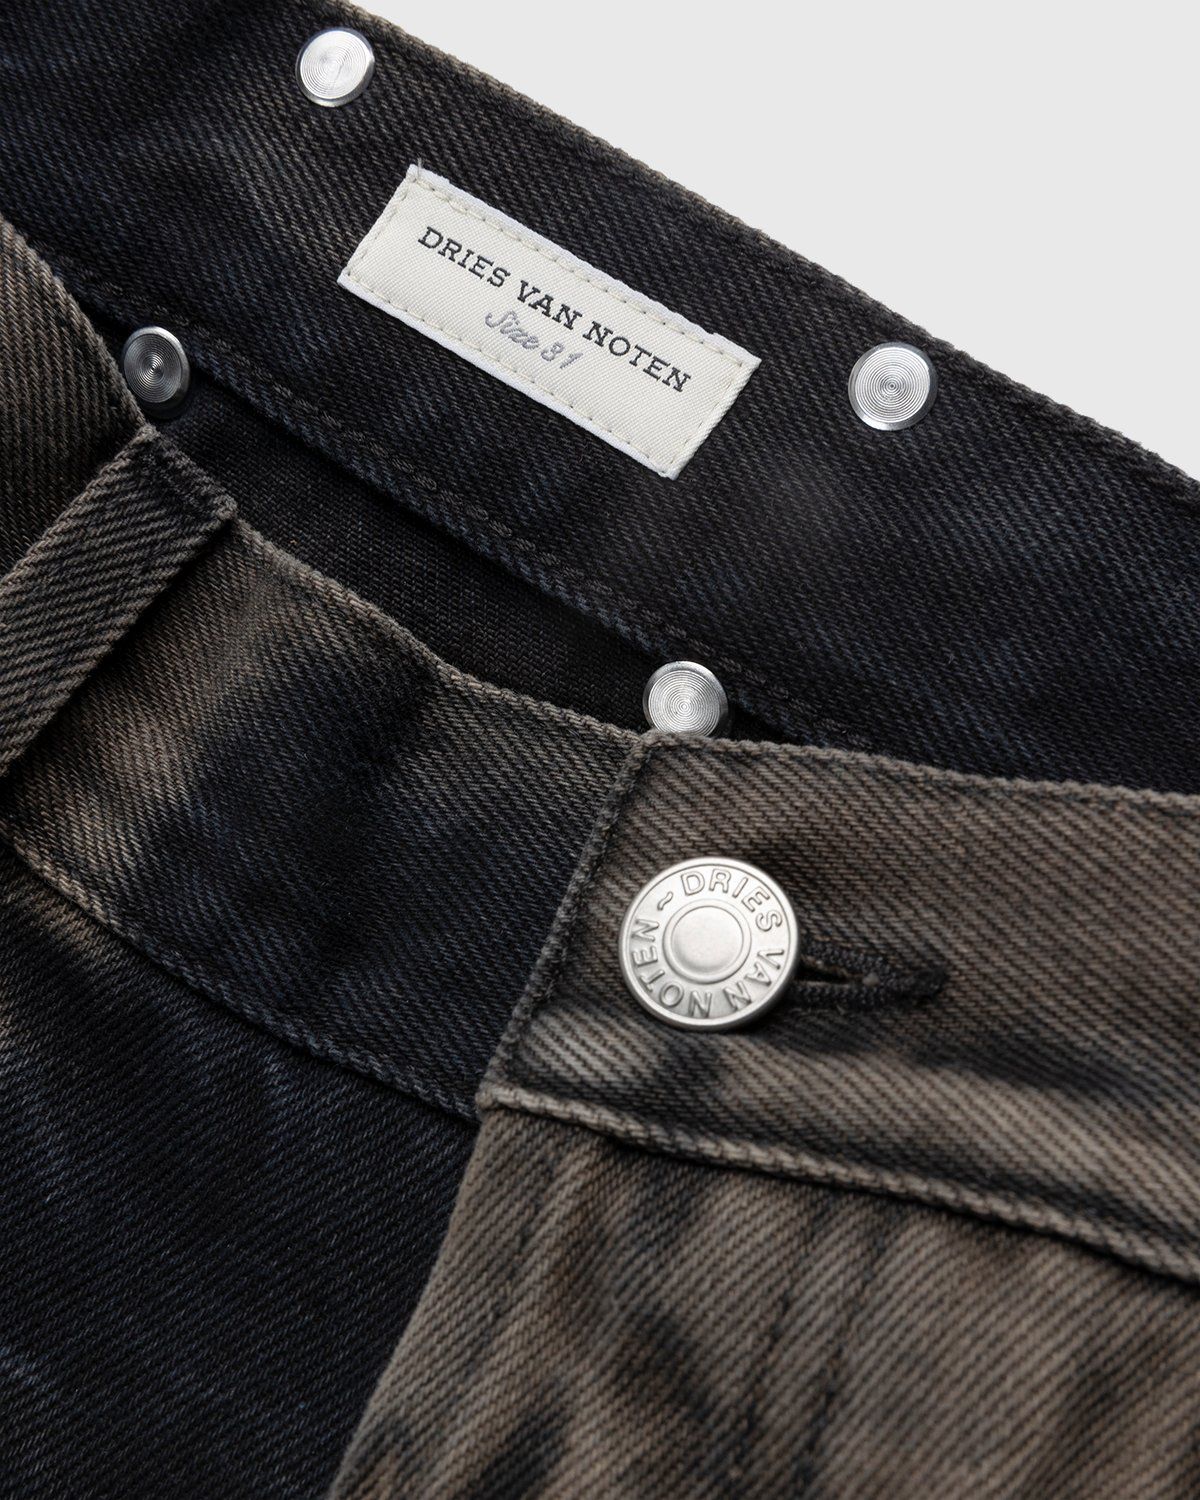 Dries van Noten – Pine Acid Wash Jeans Black - Pants - Black - Image 4